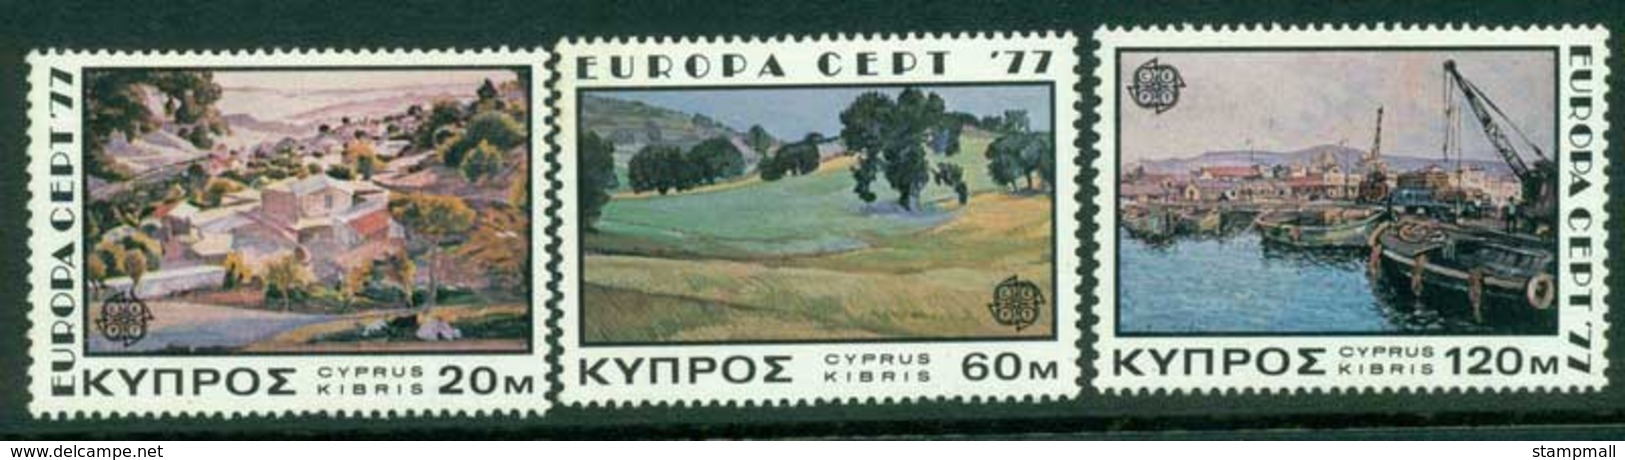 Cyprus 1977 Europa MUH Lot15326 - Unused Stamps